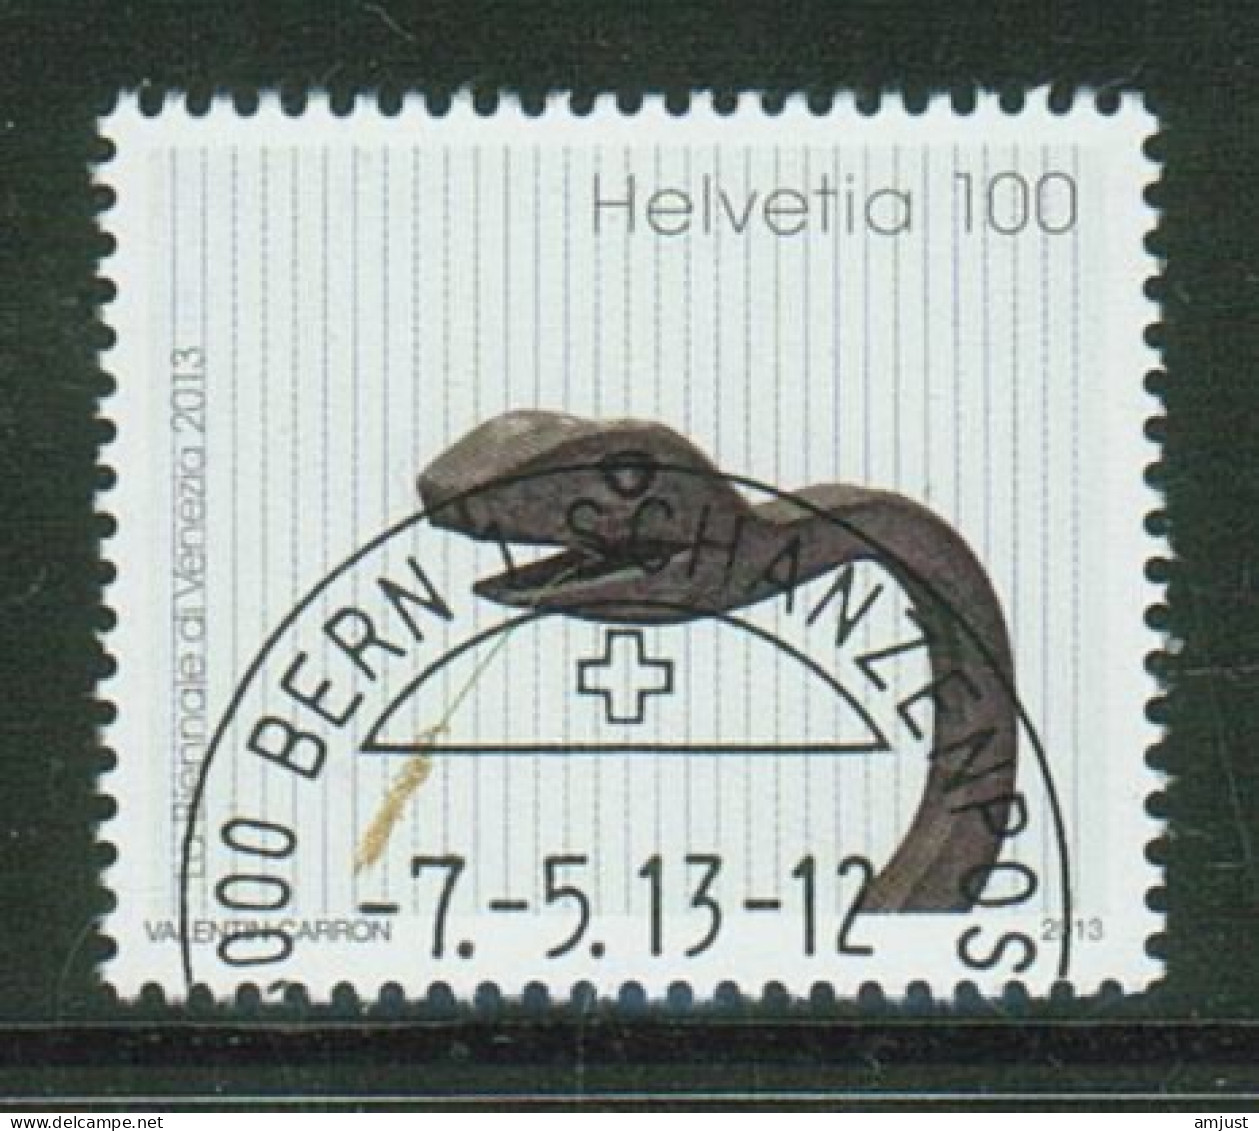 Suisse /Schweiz/Svizzera // 2013 // Sculpture De Serpent  Oblitéré No. 1467 - Used Stamps